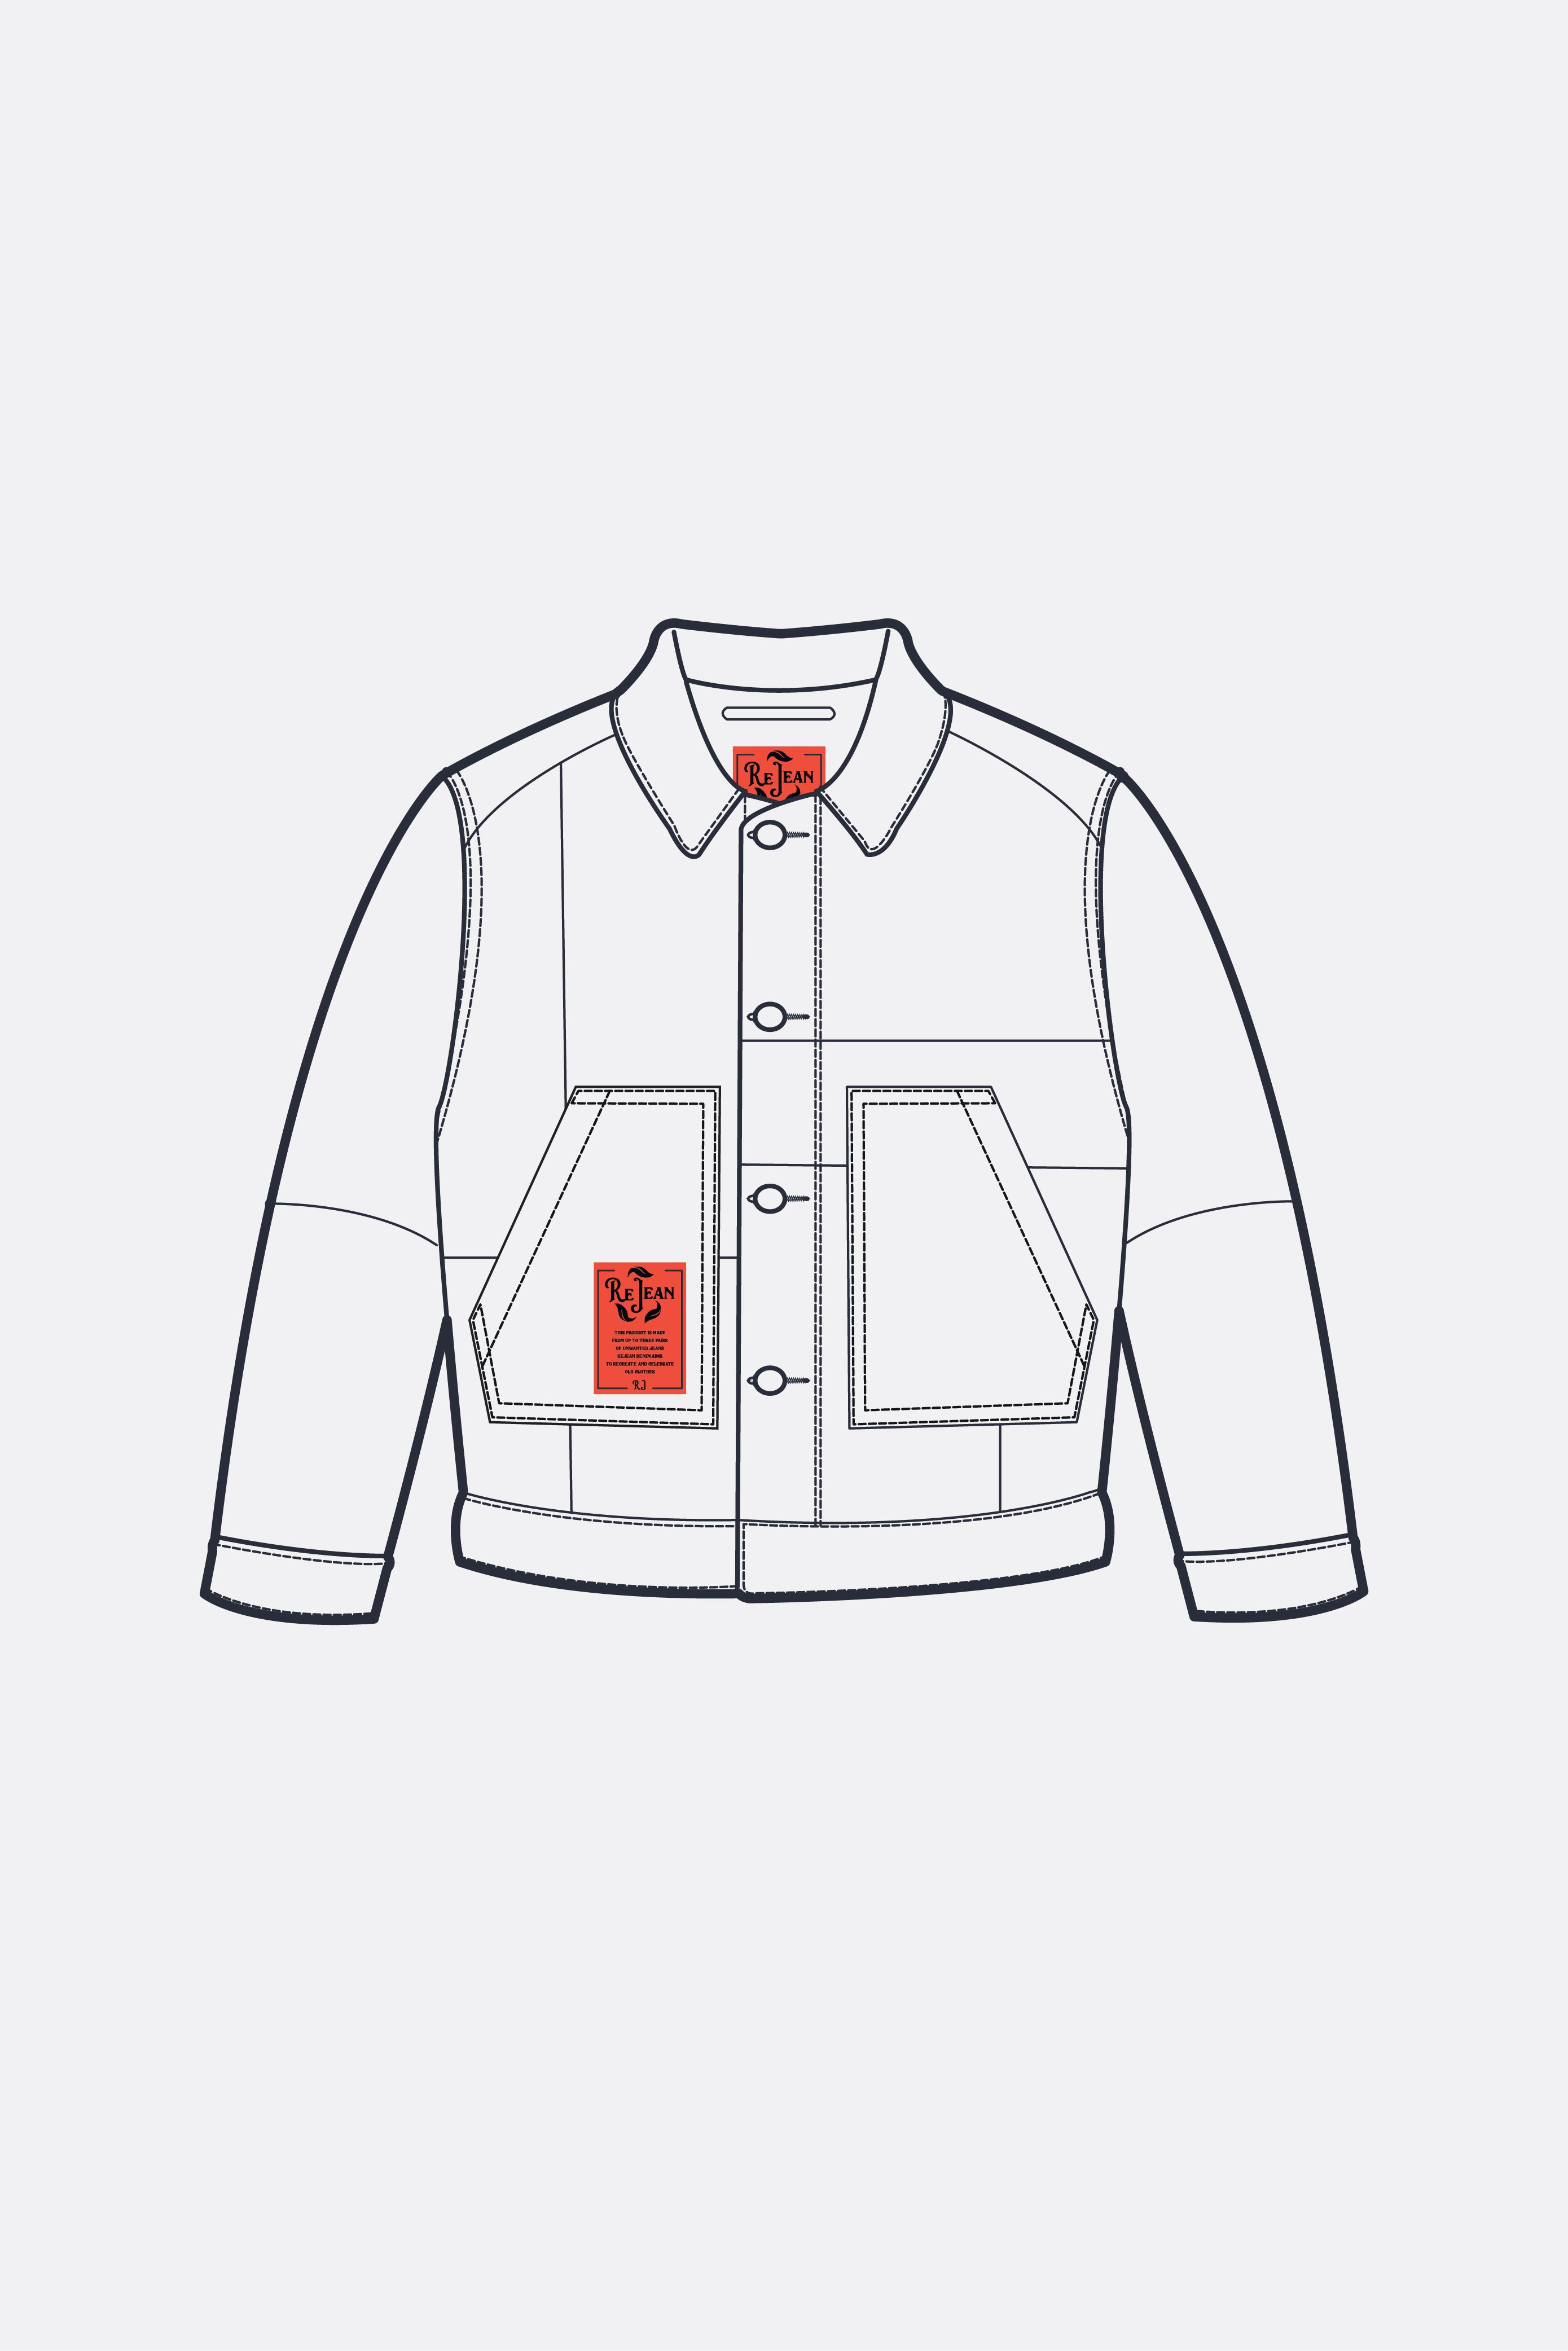 Calvay Classic Carpenter Jacket in Patchwork Denim - ReJean Denim - zero waste - circular fashion brand 